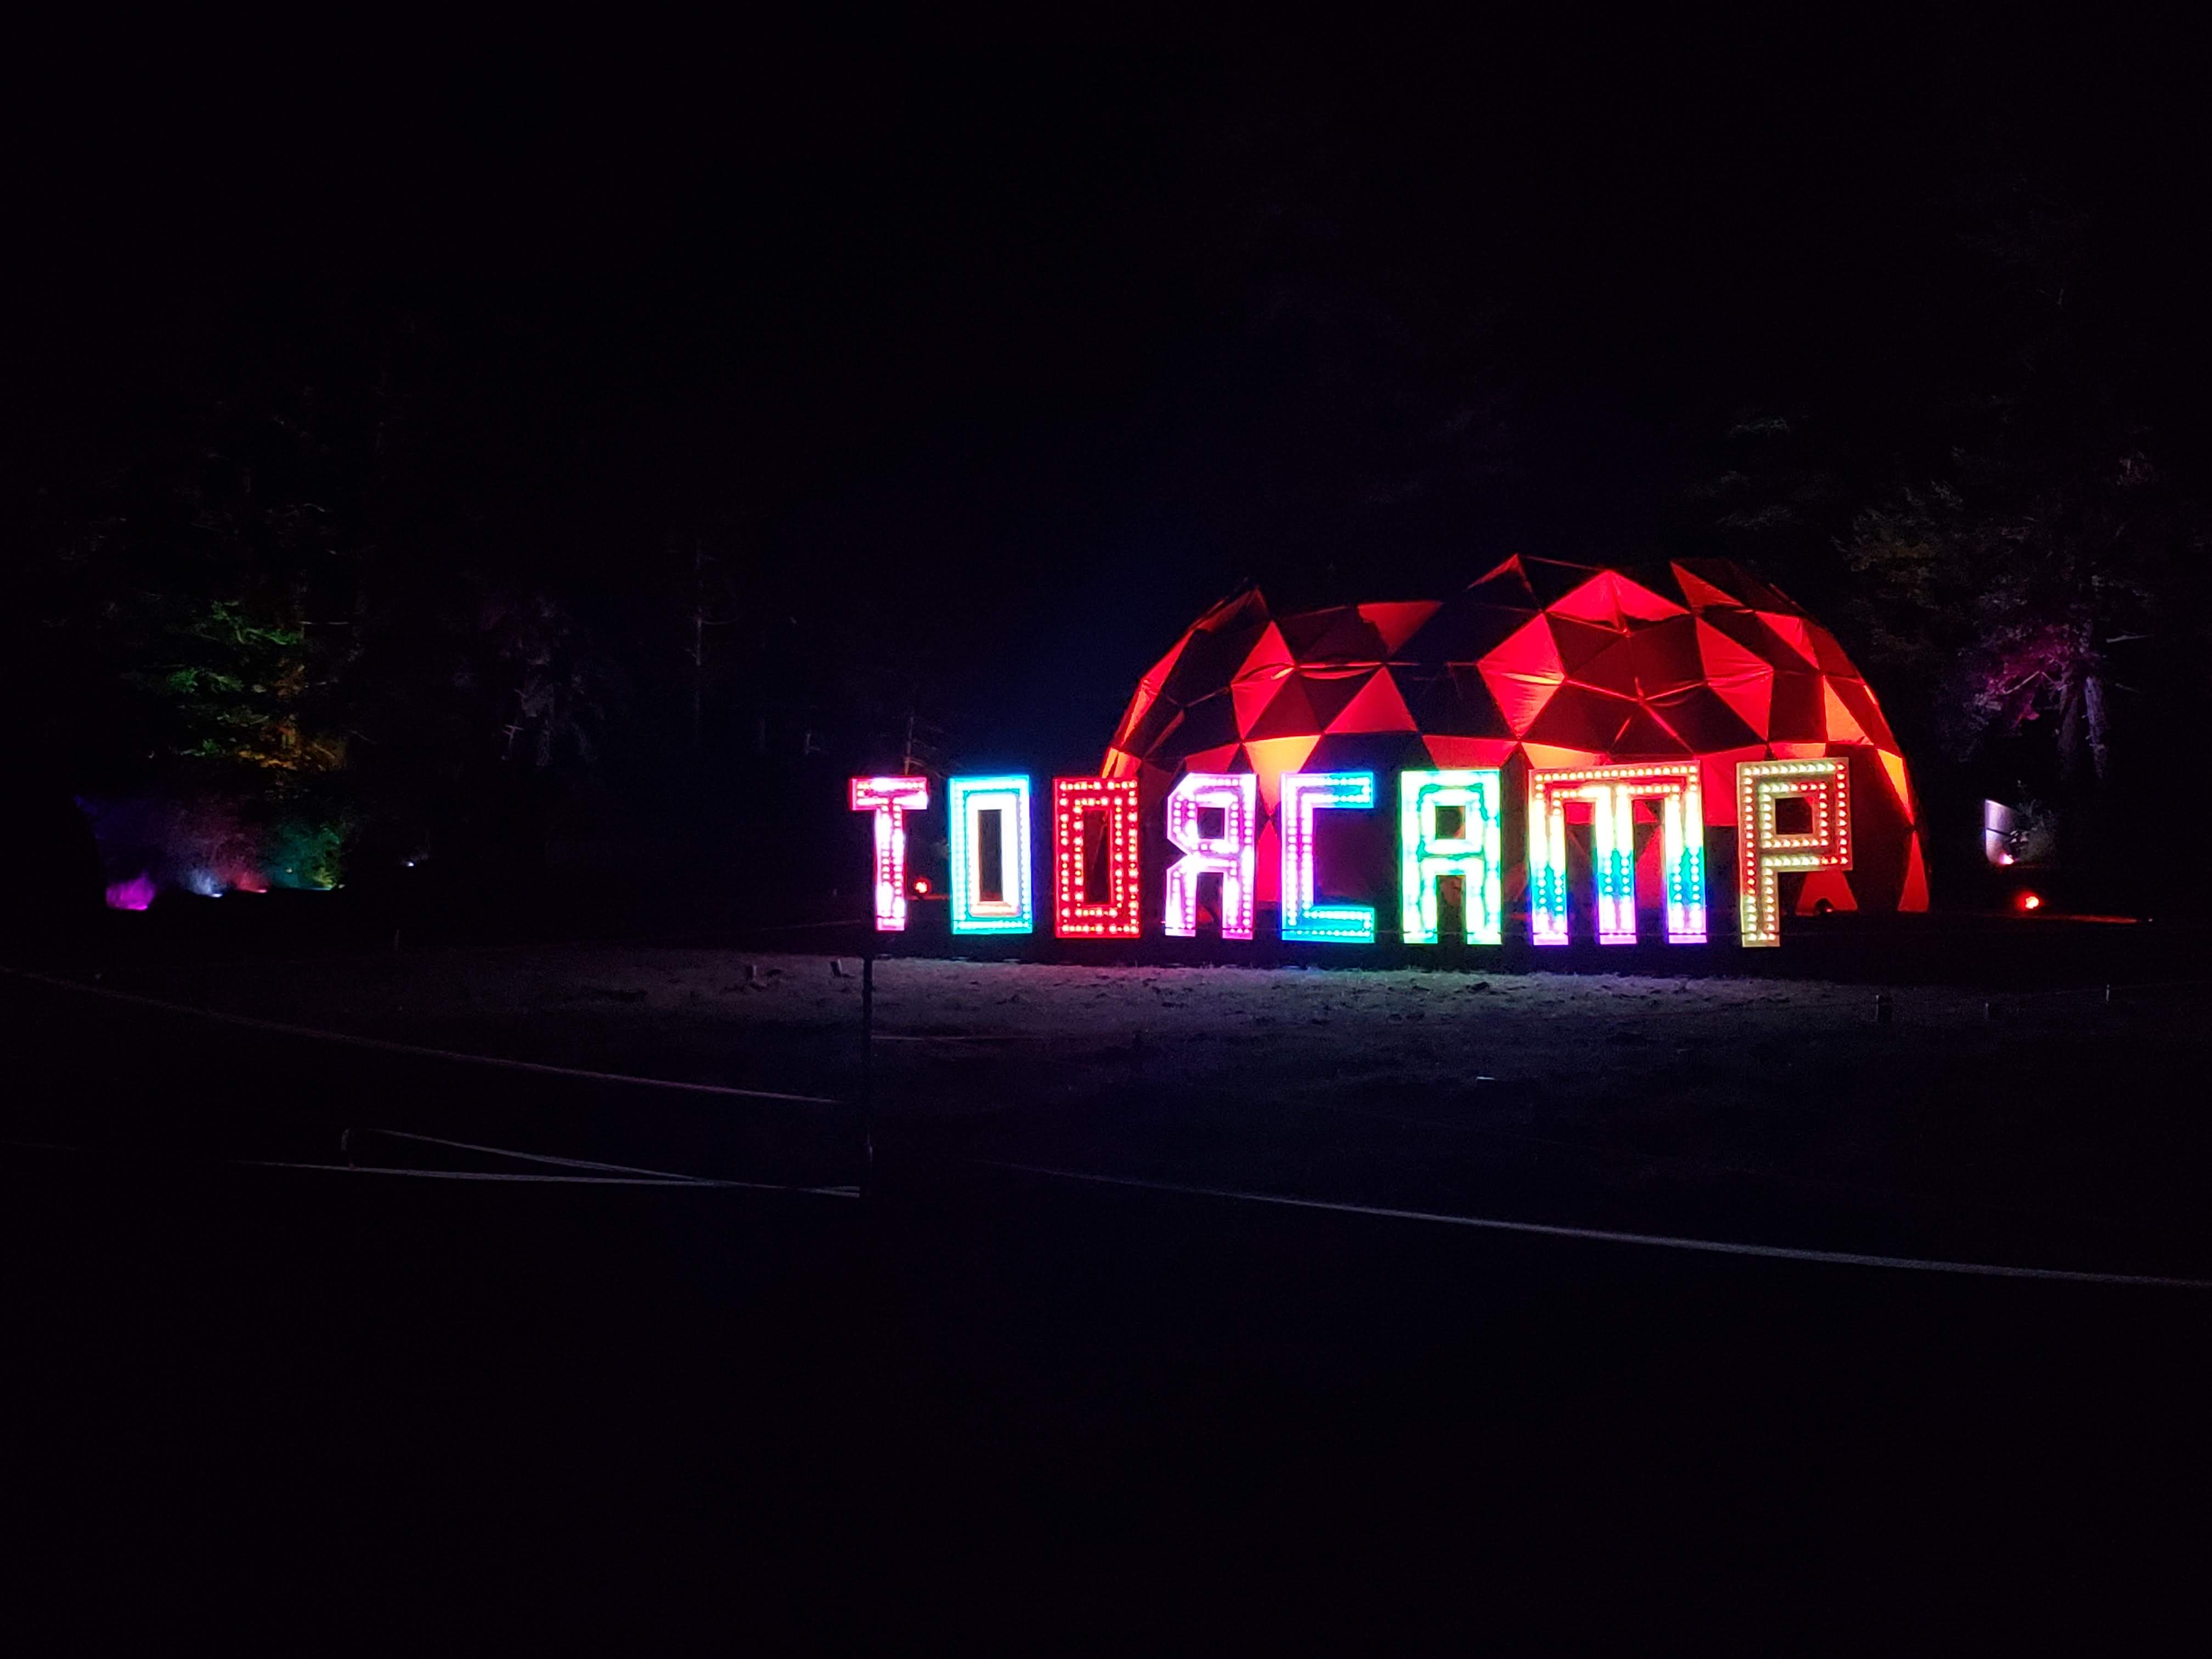 "ToorCamp sign"